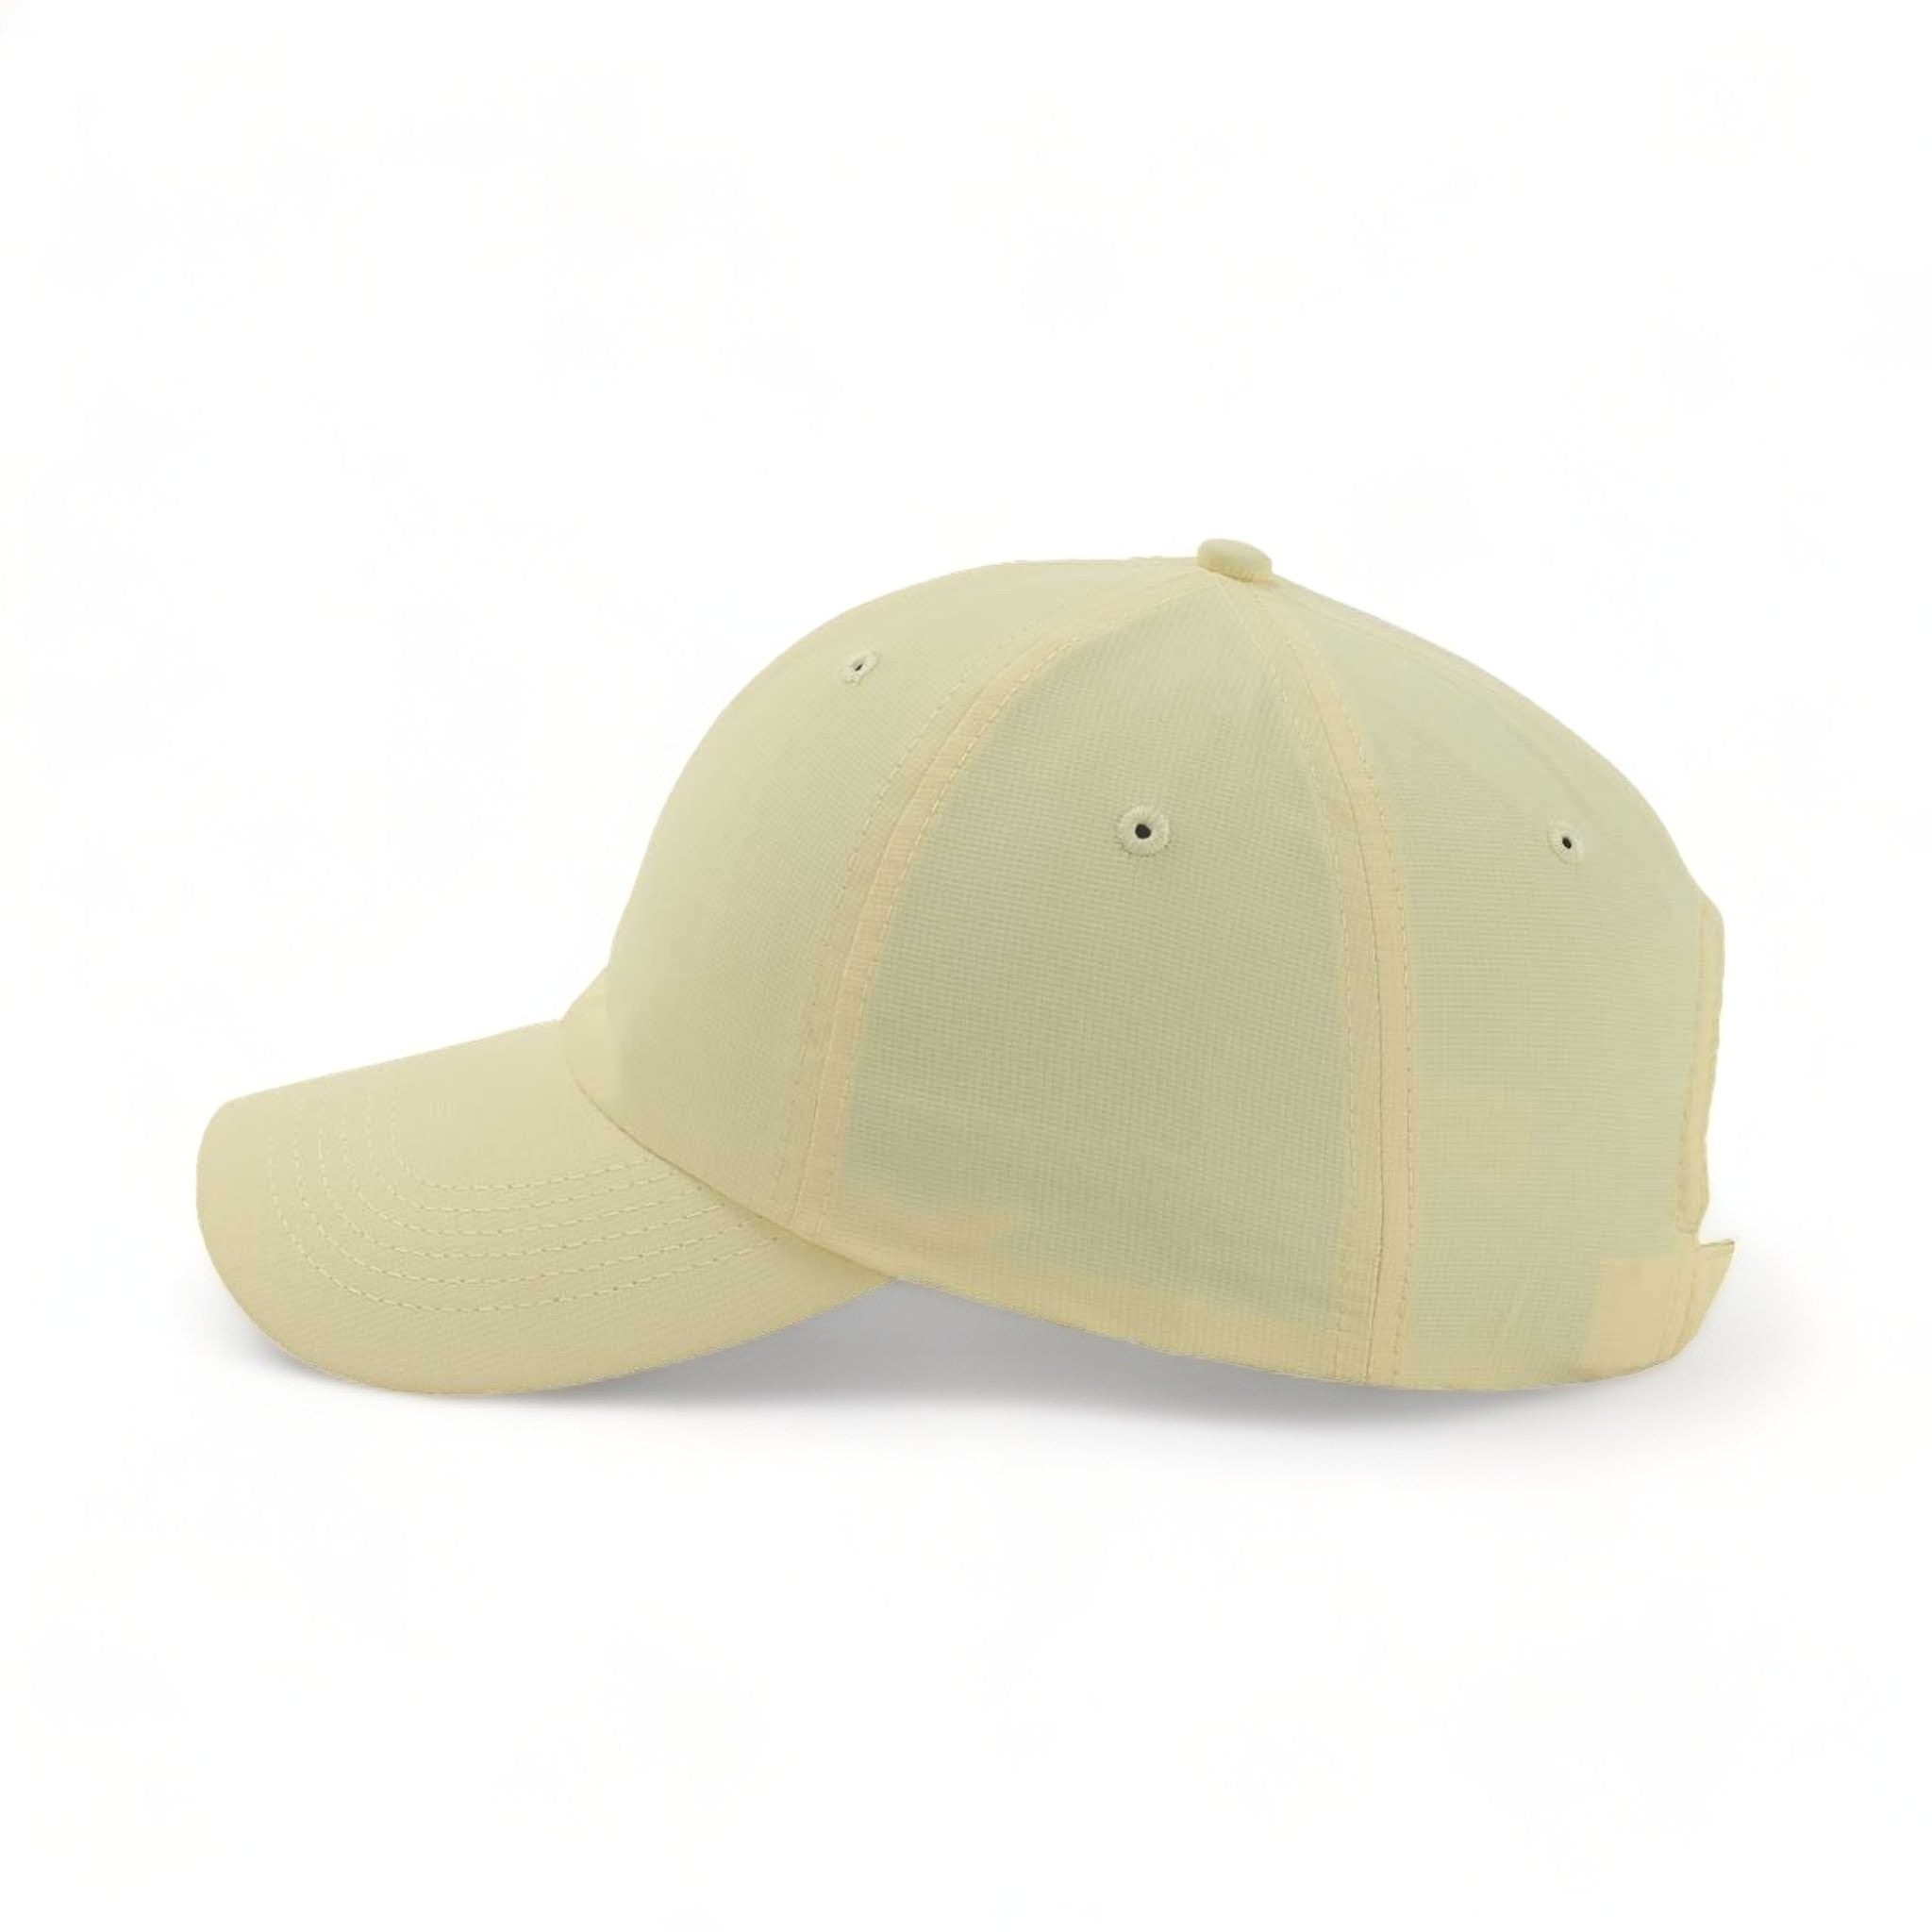 Side view of Imperial X210P custom hat in sunbeam